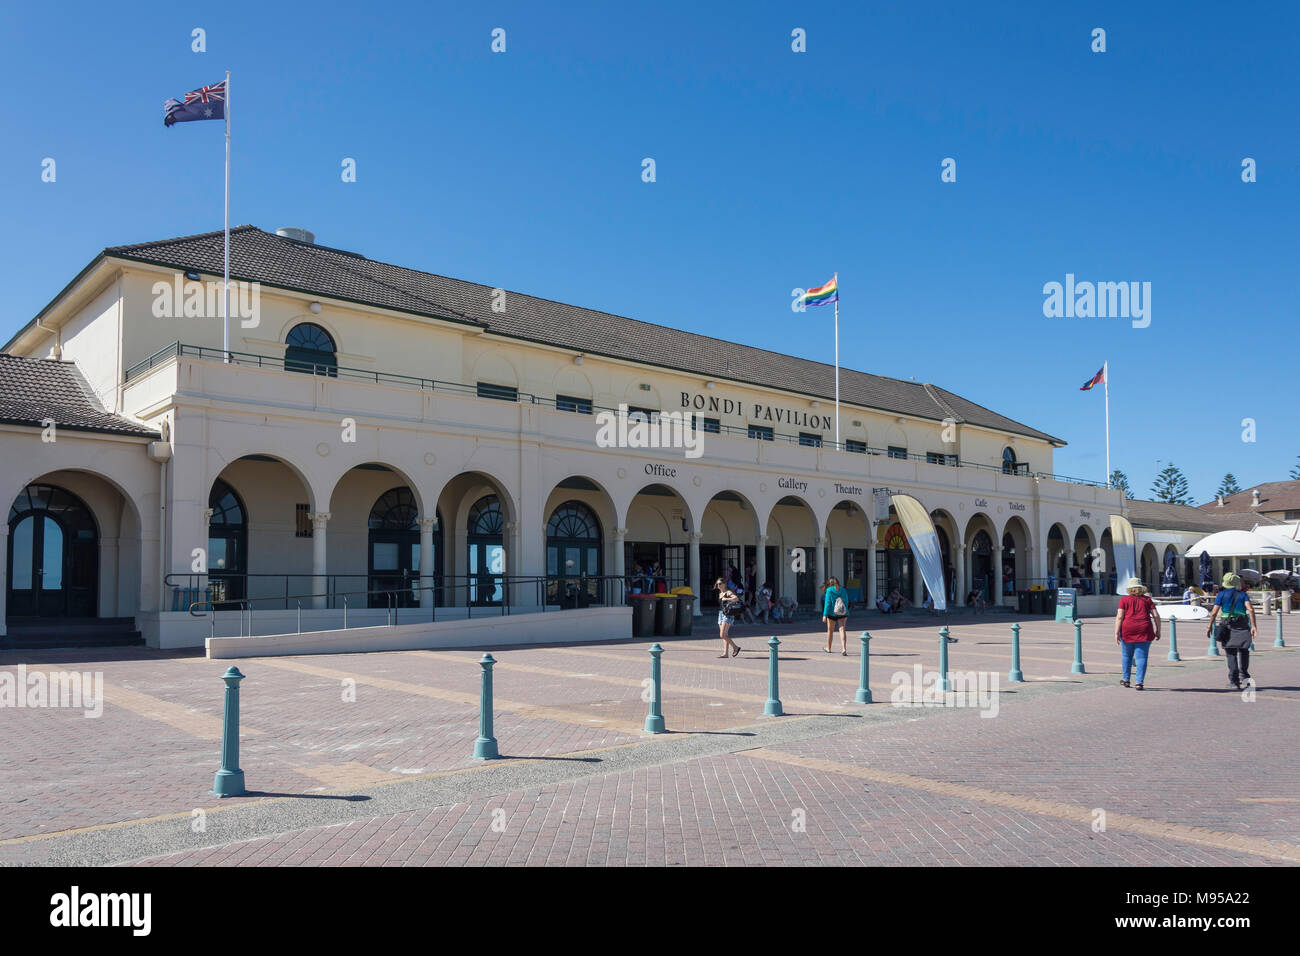 Bondi Pavilion, Bondi Beach, Sydney, New South Wales, Australia Stock Photo